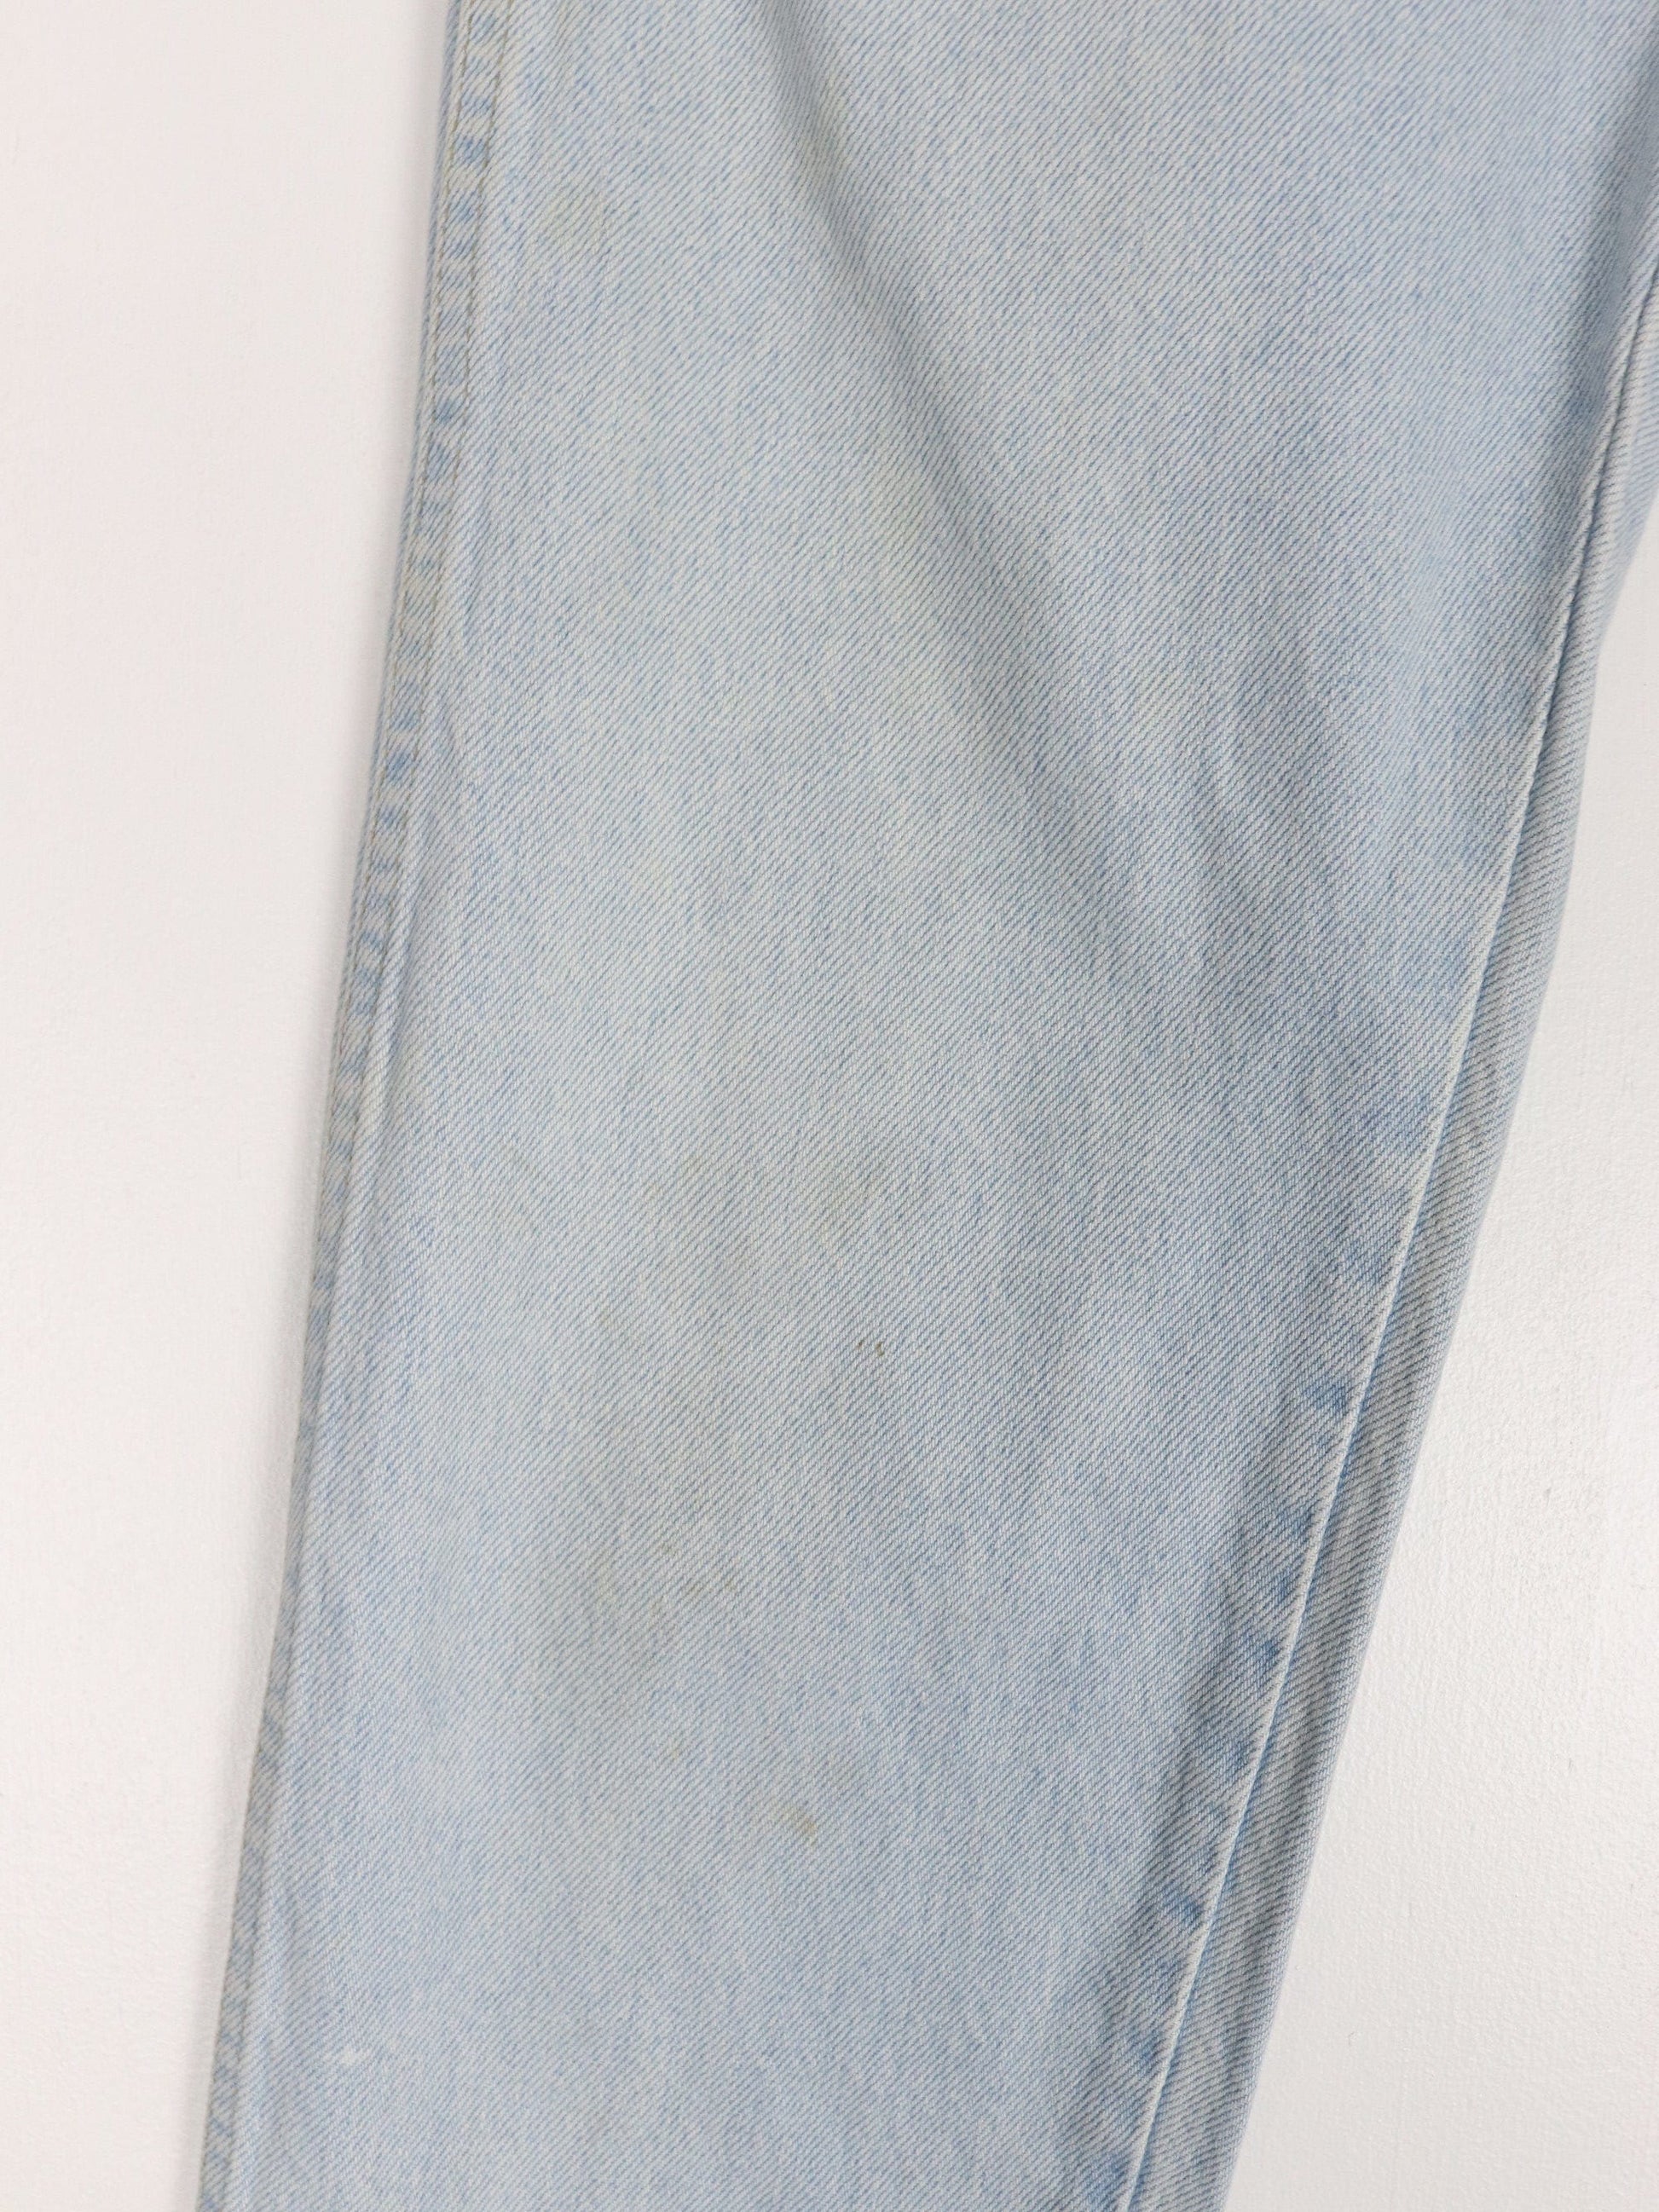 Wrangler Jeans Vintage Wrangler Pants Fits Mens 28 x 31 Blue Denim Jeans